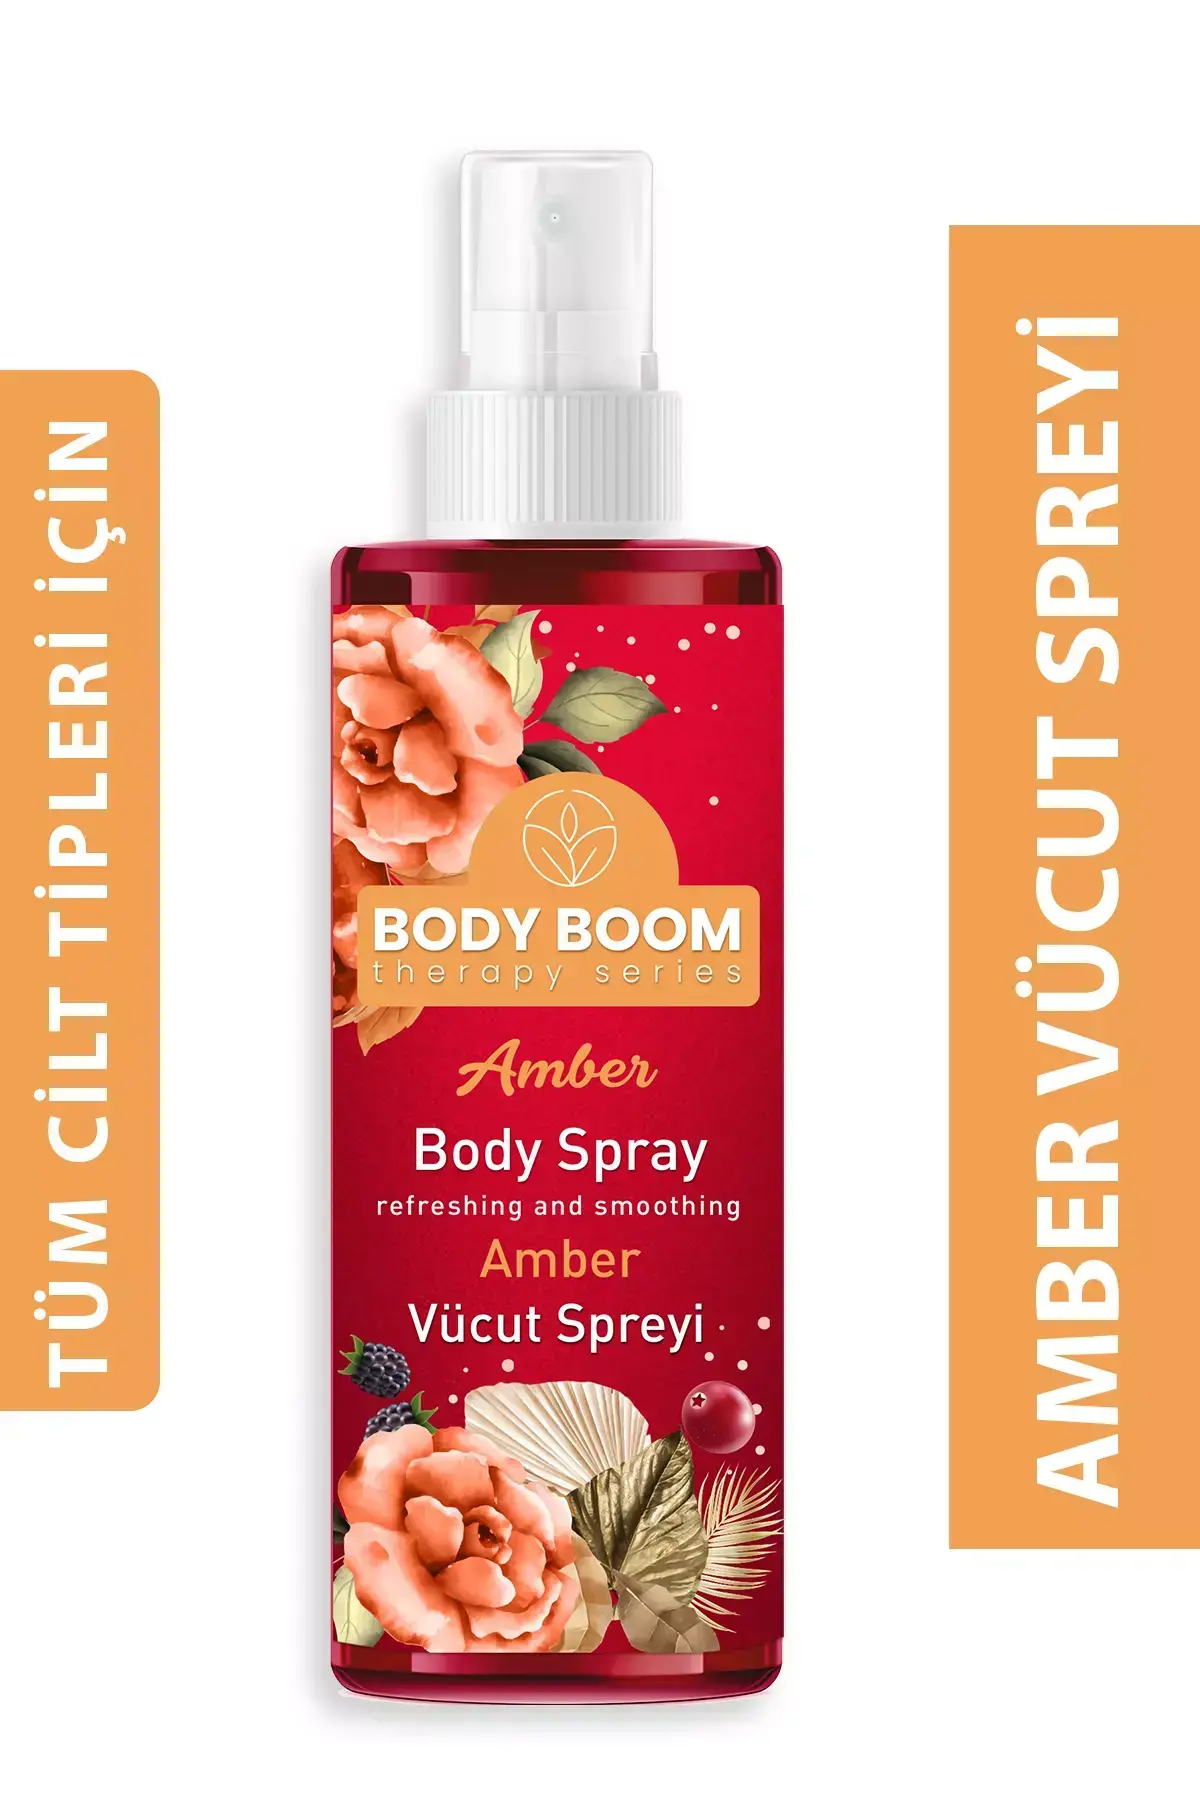 BODY BOOM Amber Body Spray 100 ML - 2